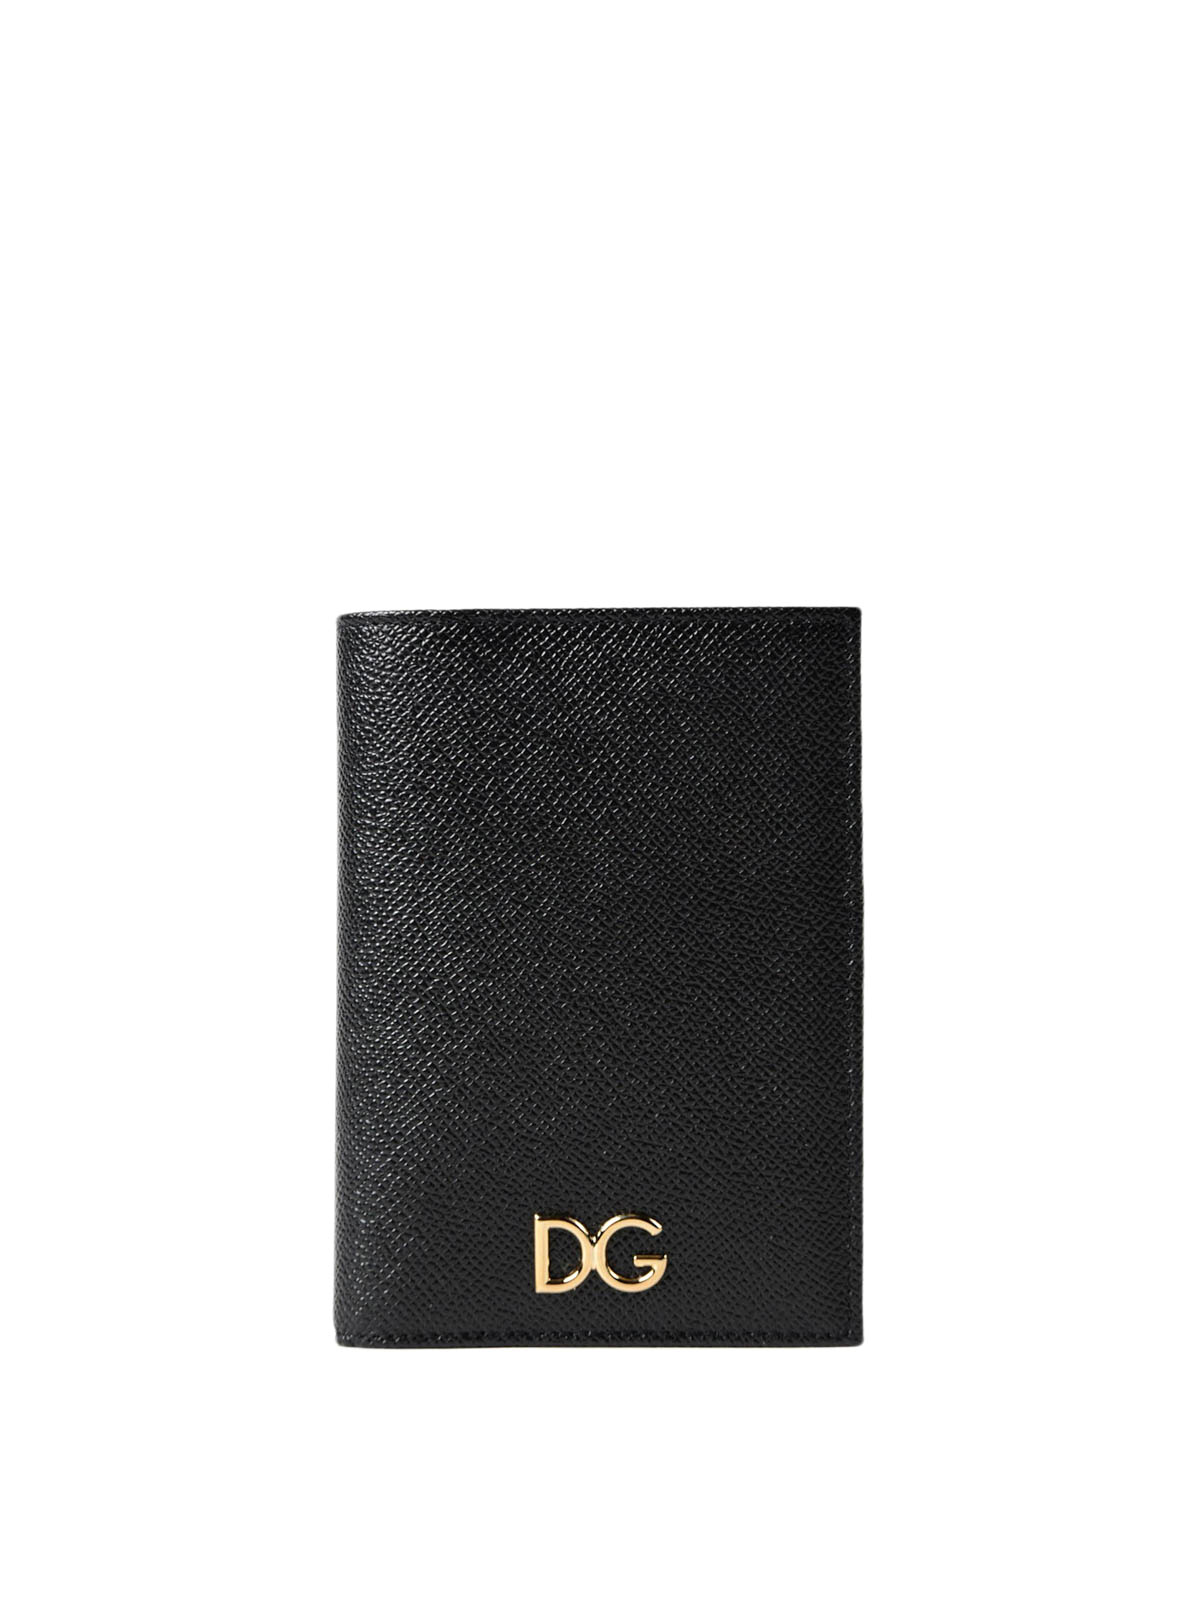  Dolce&Gabbana women Dauphine wallet nero : Clothing